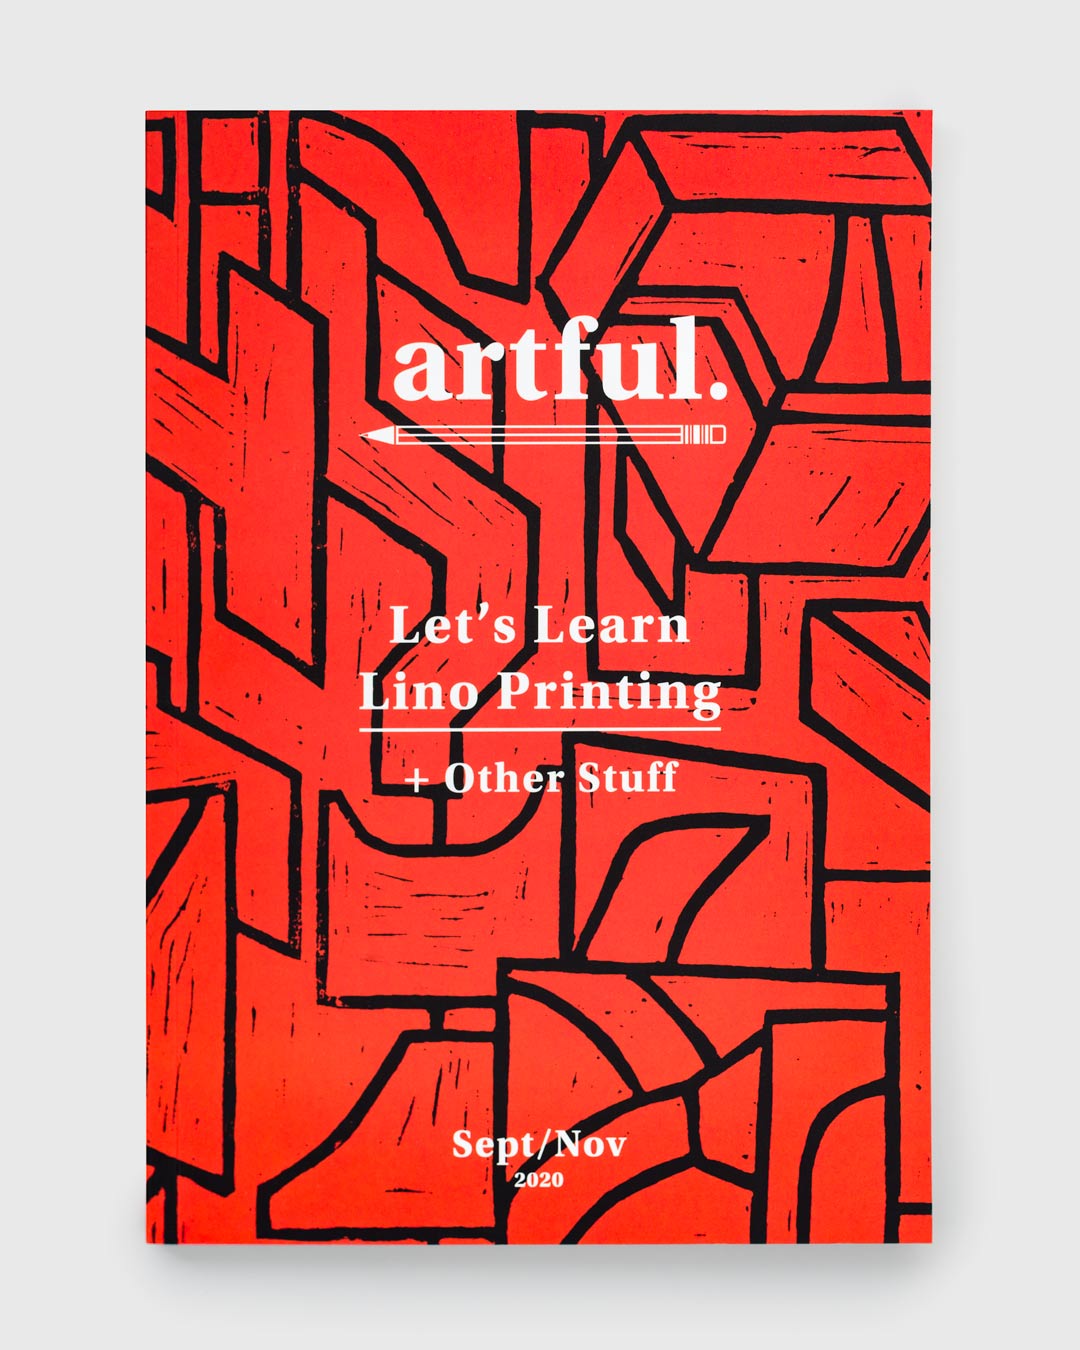 Artful: Art School Magazines